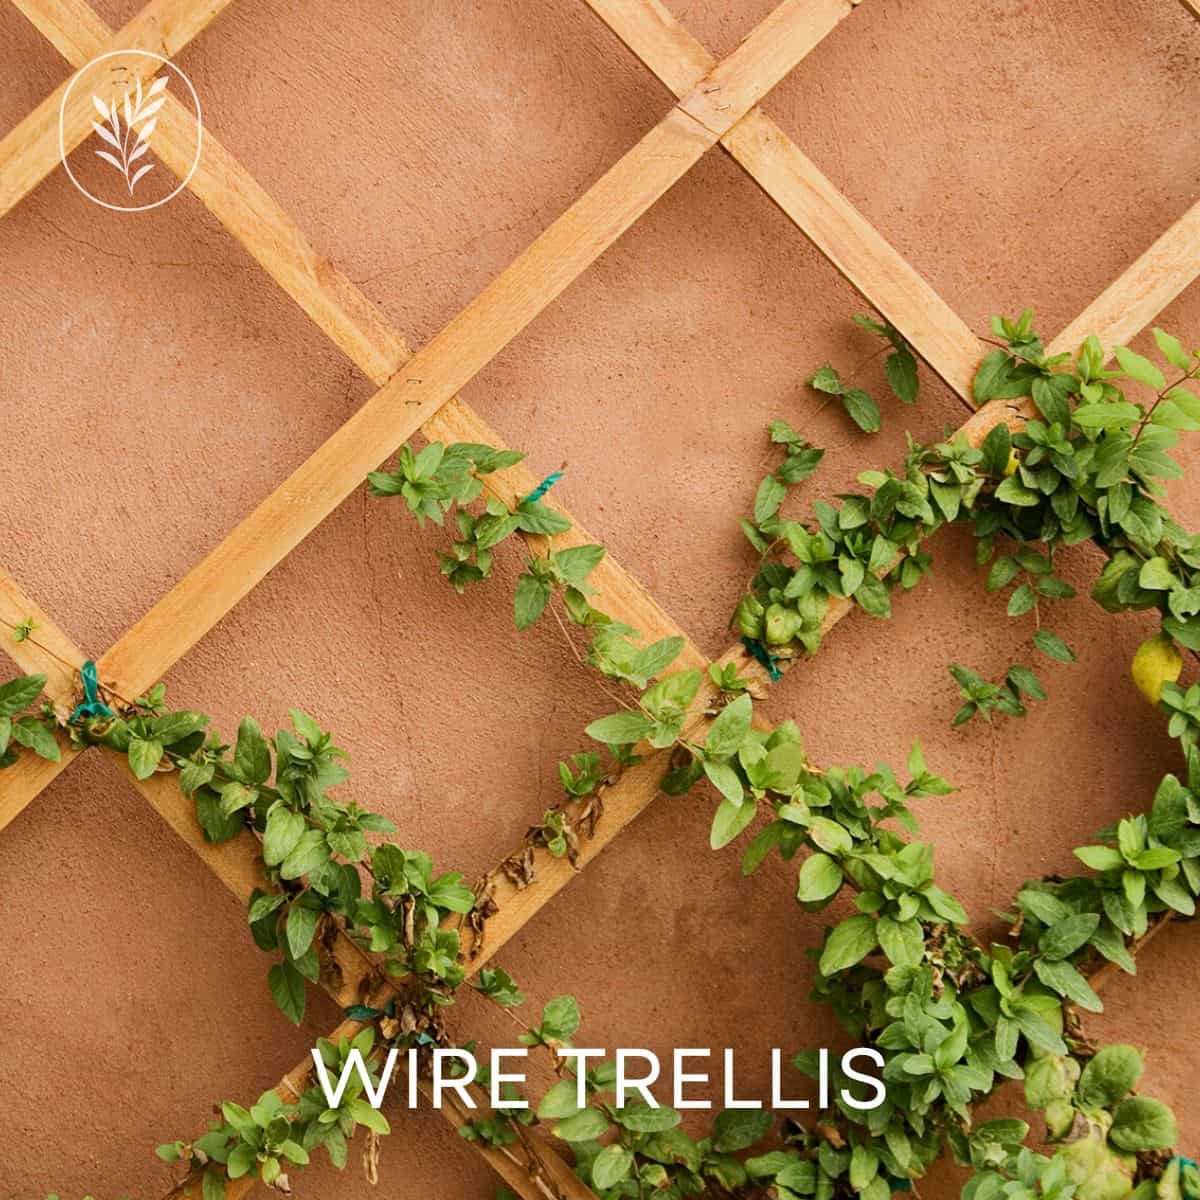 Wire trellis via @home4theharvest